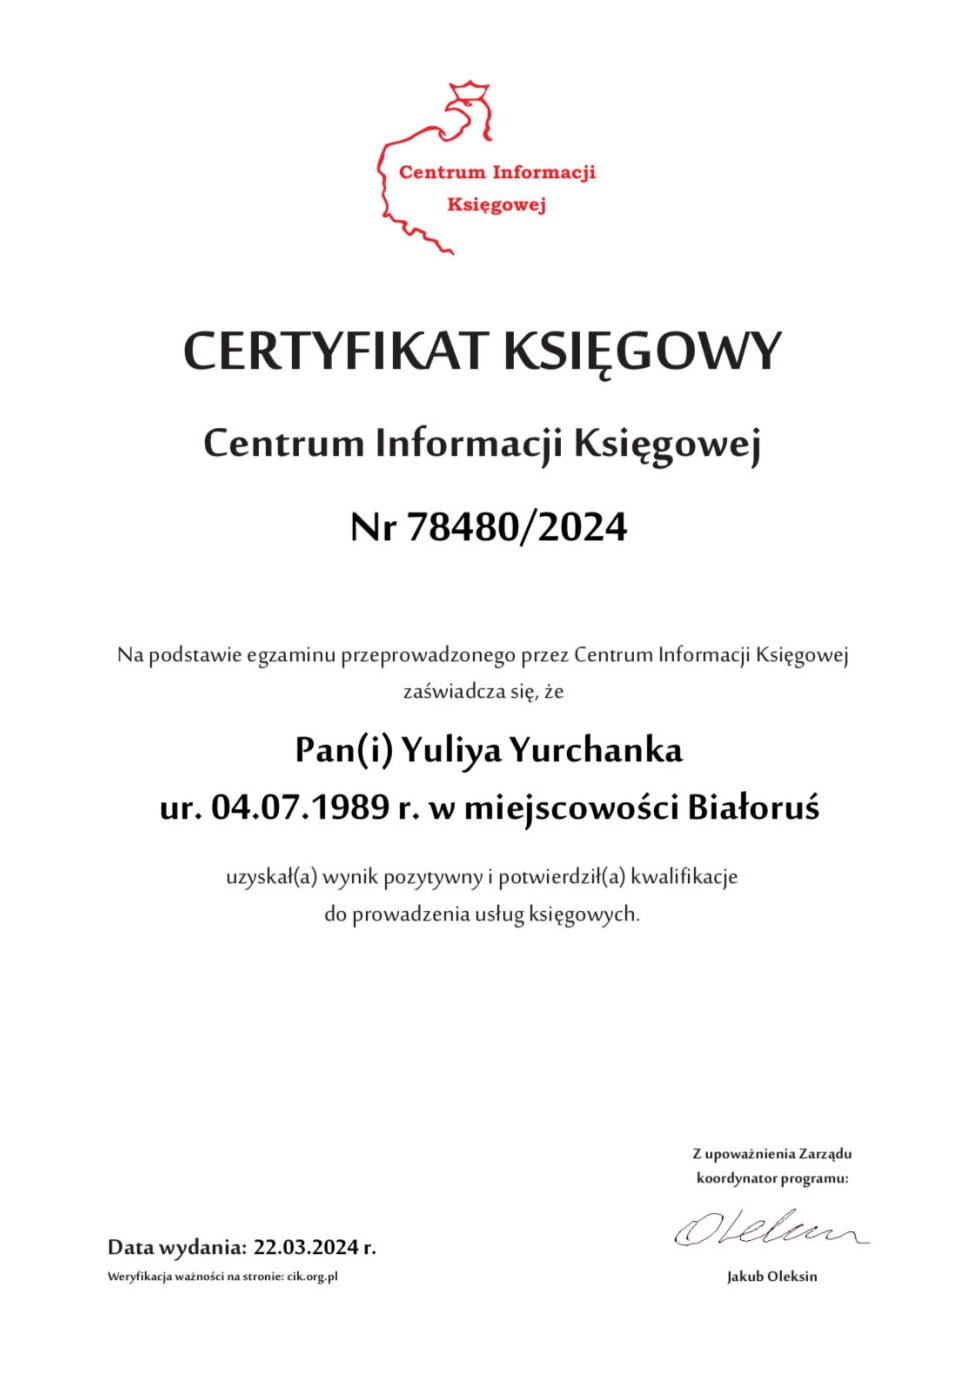 Бухгалтер Варшава - Сертификат